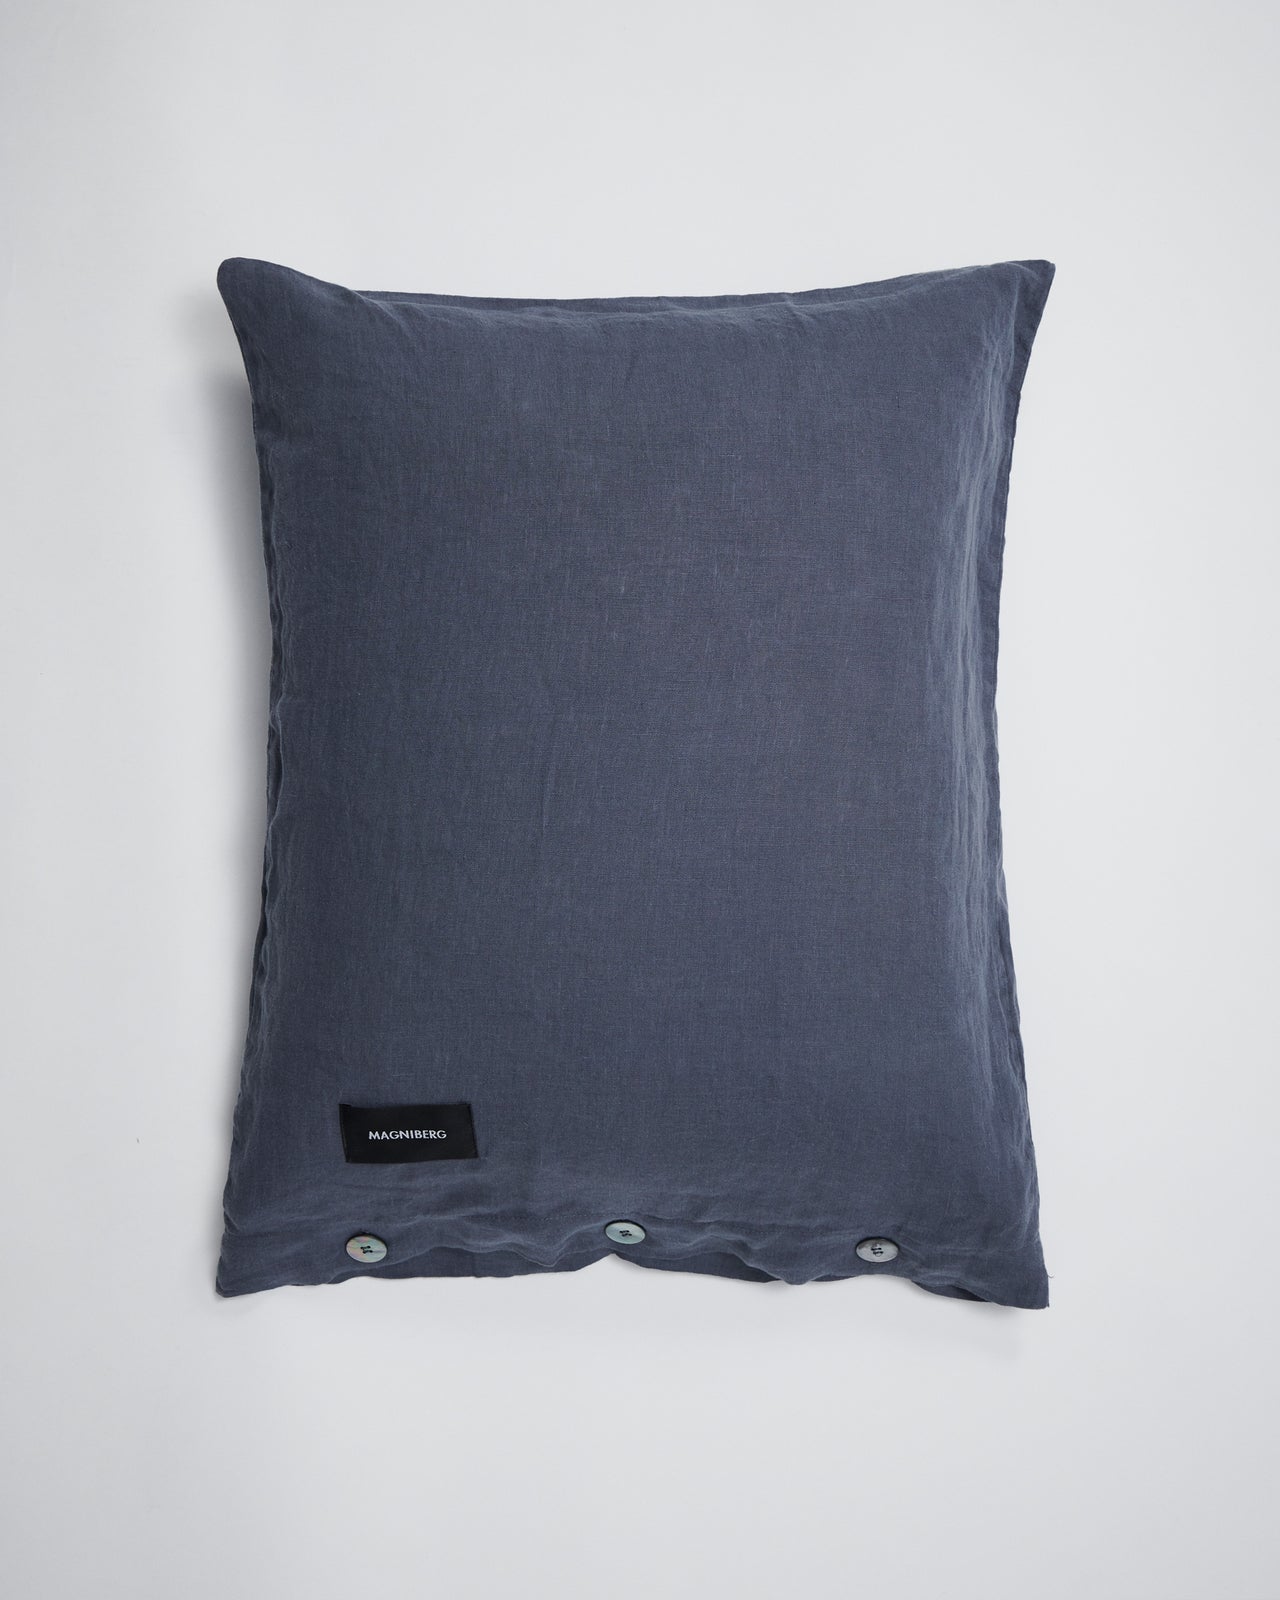 Magniberg Pillow Cases (Linen Options)